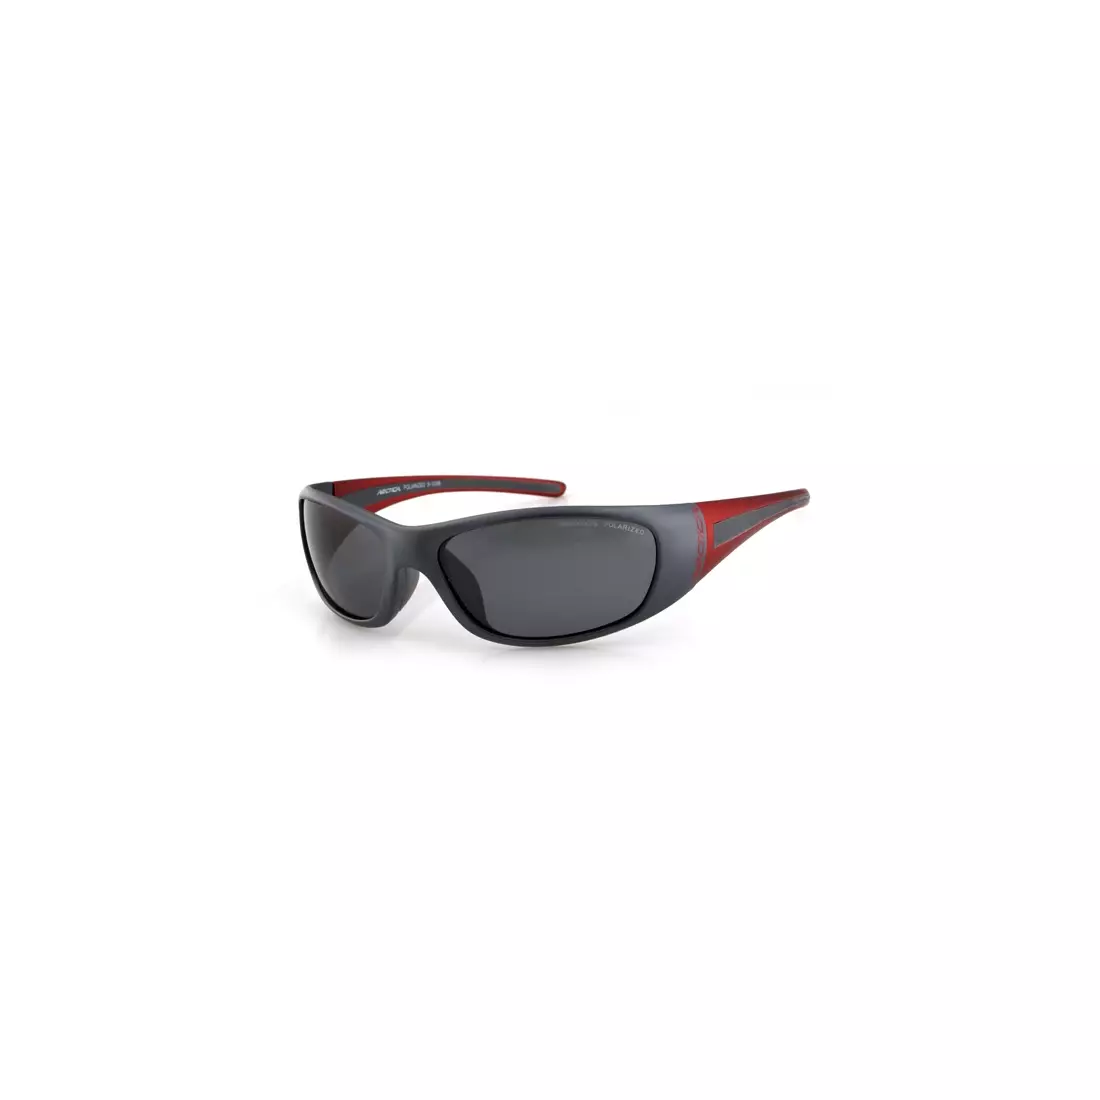 ARCTICA Sportbrille S-103 B - Farbe: Grau-Rot